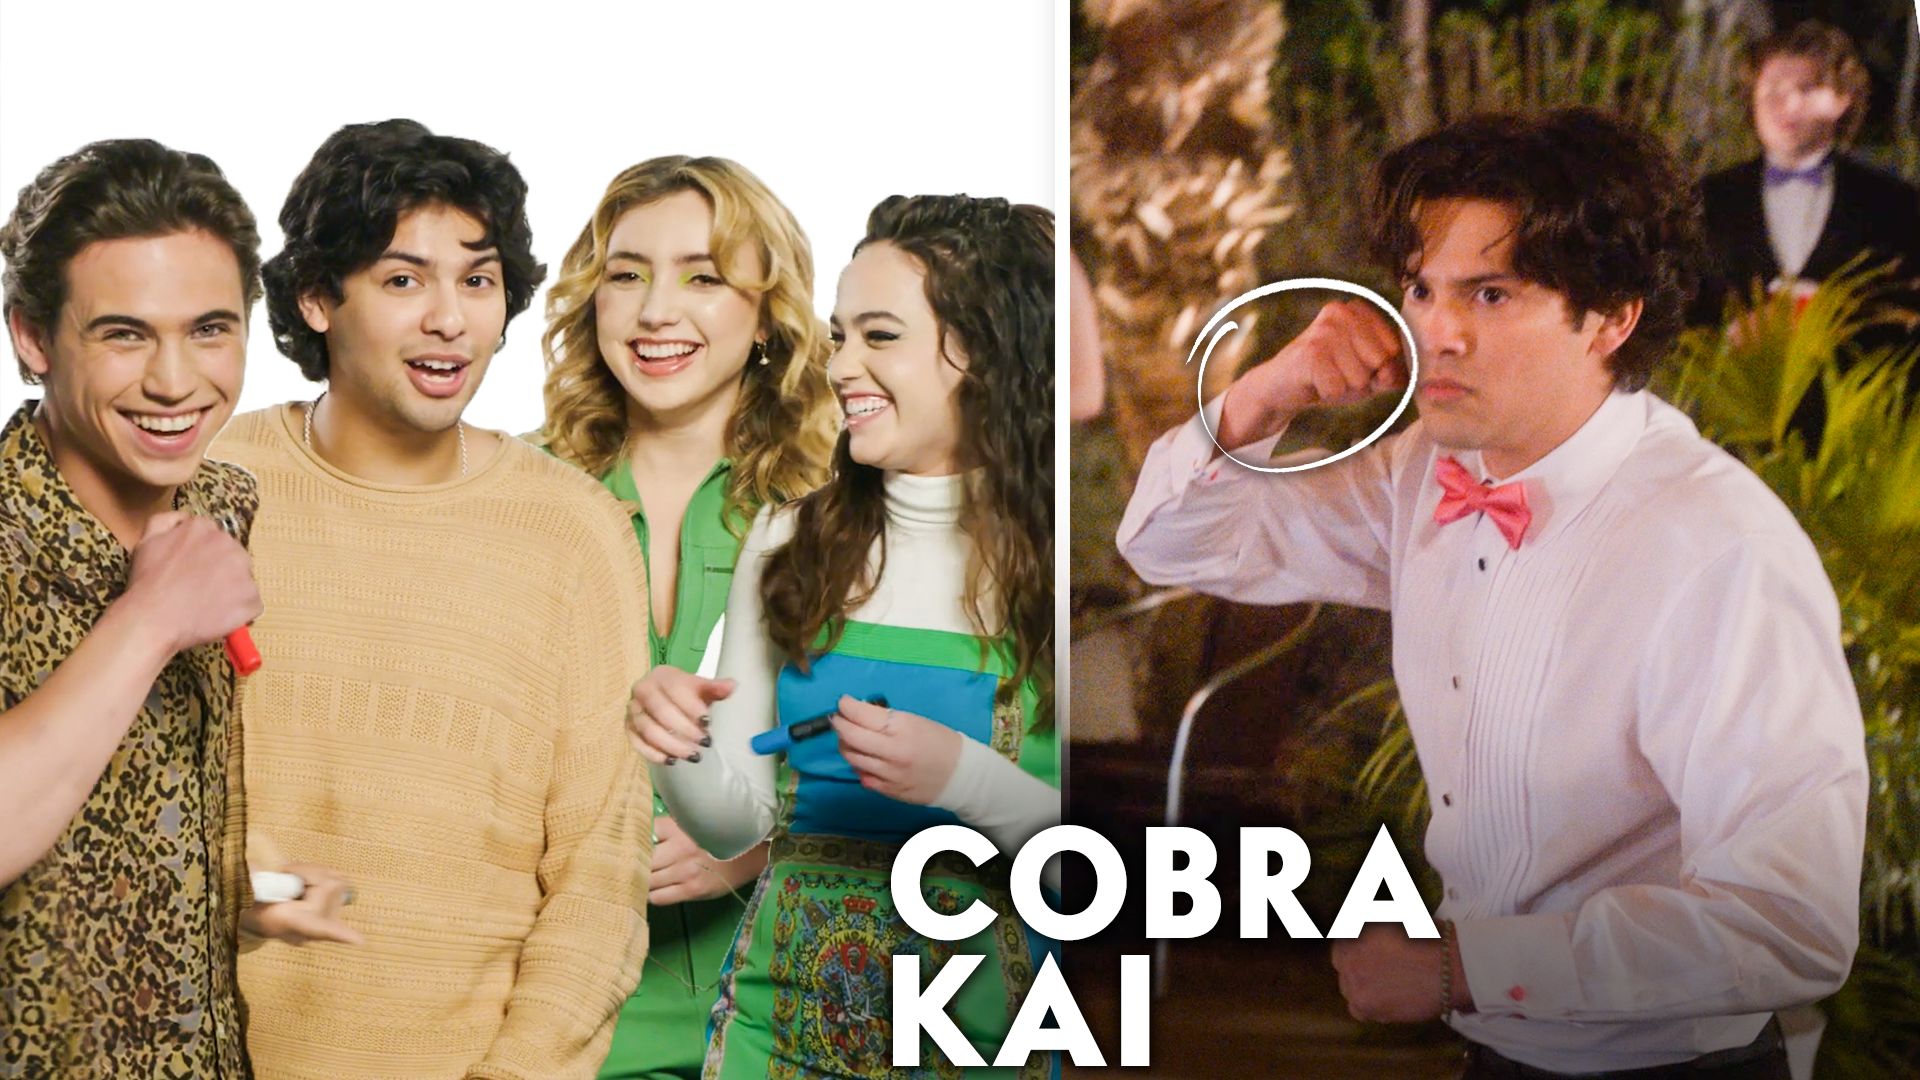 Cobra Kai” Star Xolo Maridueña Has a Lot to Say About His Co-Star